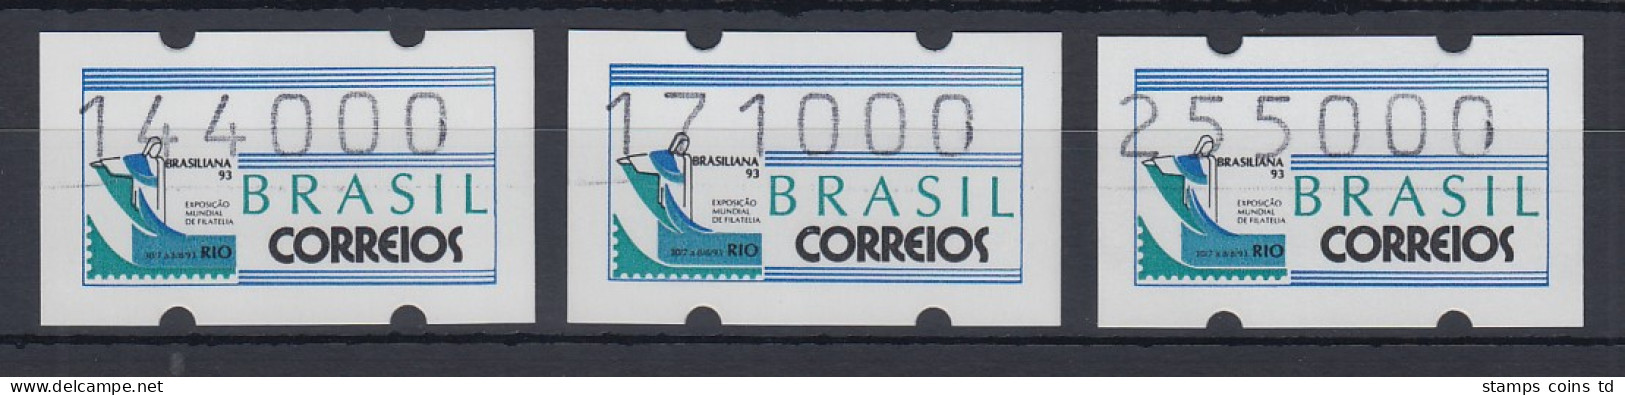 Brasilien Klüssendorf-ATM 1993 BRASILIANA Mi-Nr 5 Satz 144000-171000-255000 ** - Vignettes D'affranchissement (Frama)